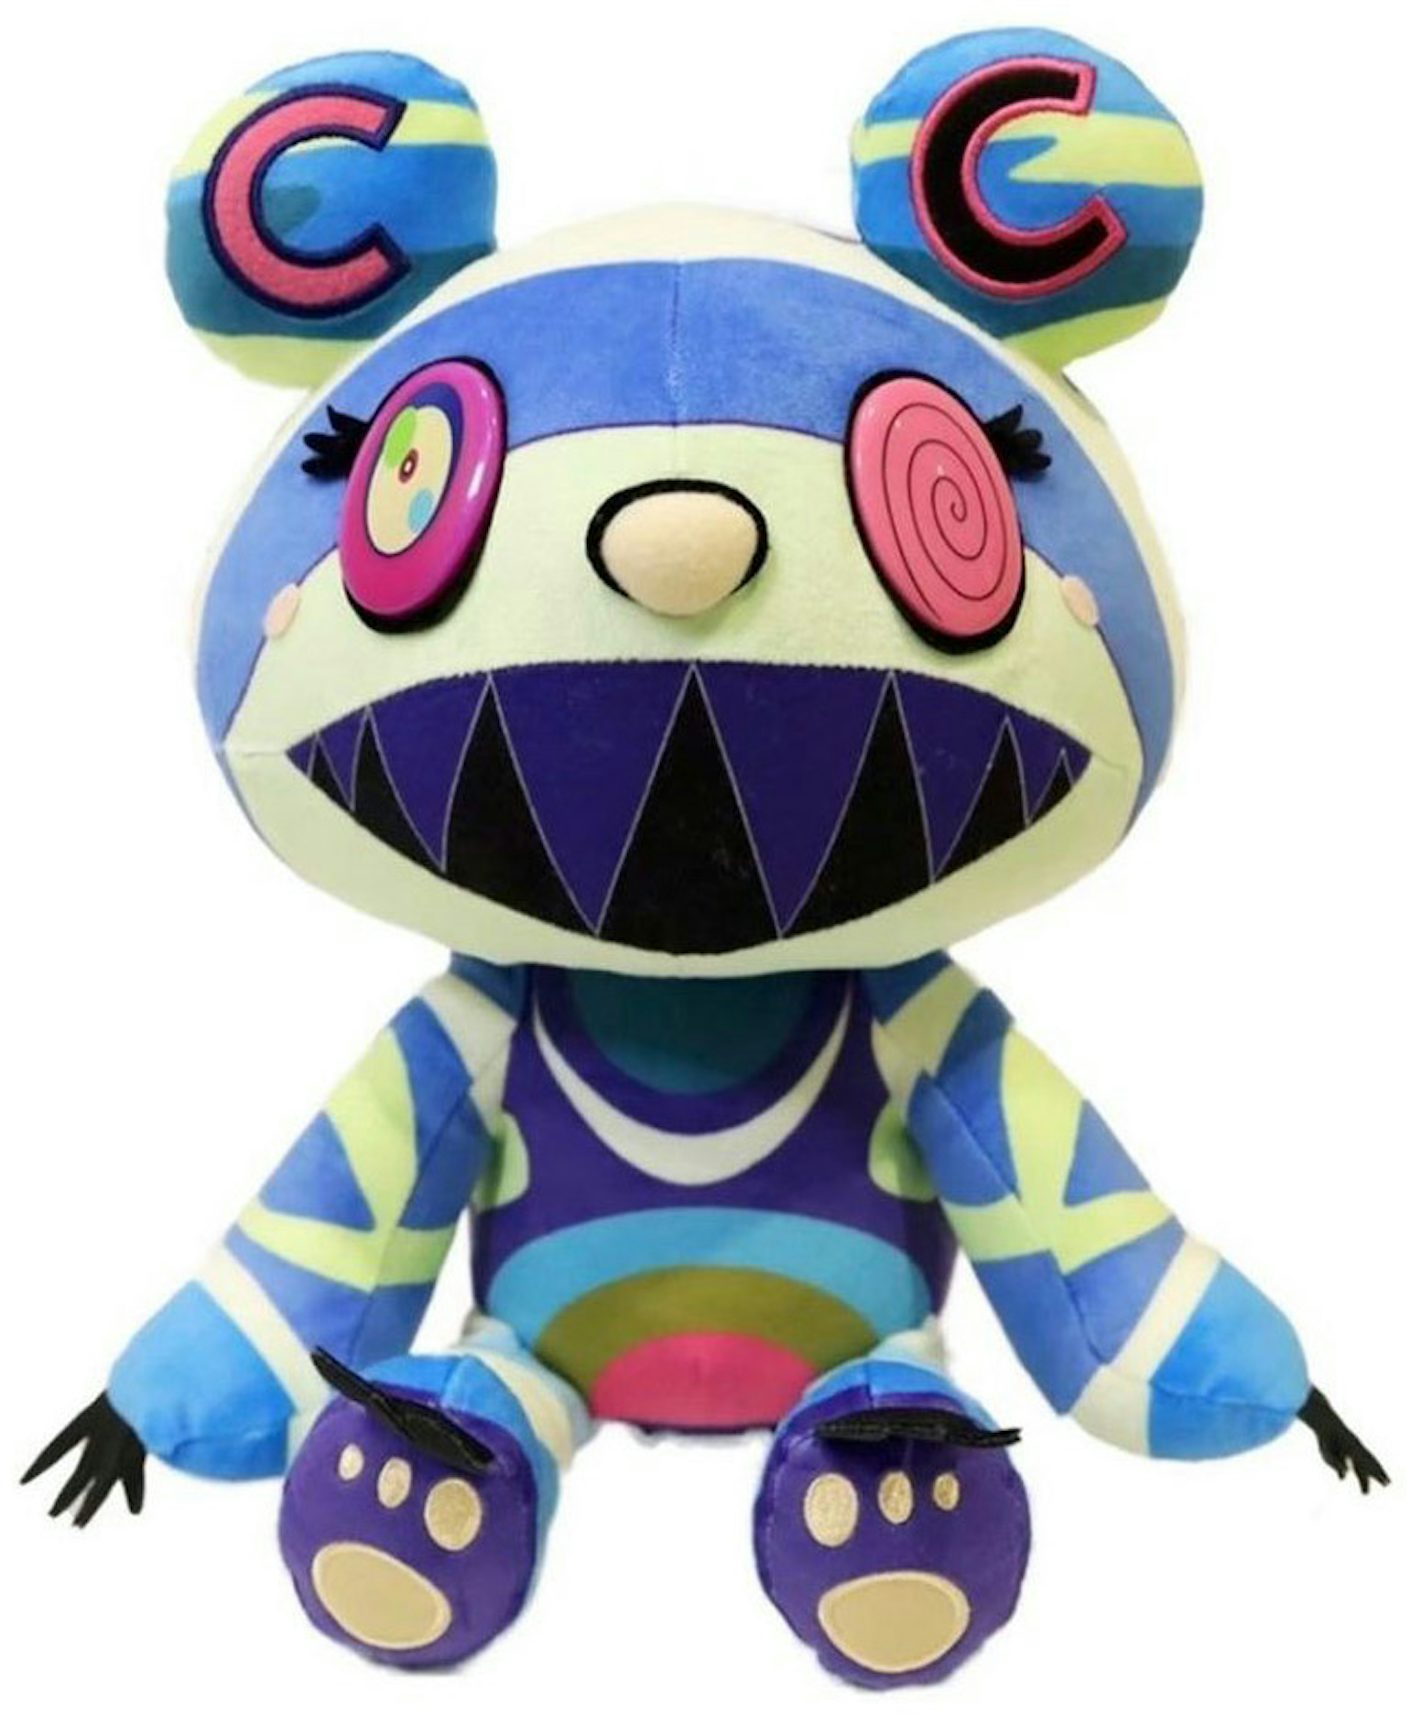 Soft Hype Bear Murakami Plush Toy Soft Stuffed Animal Doll